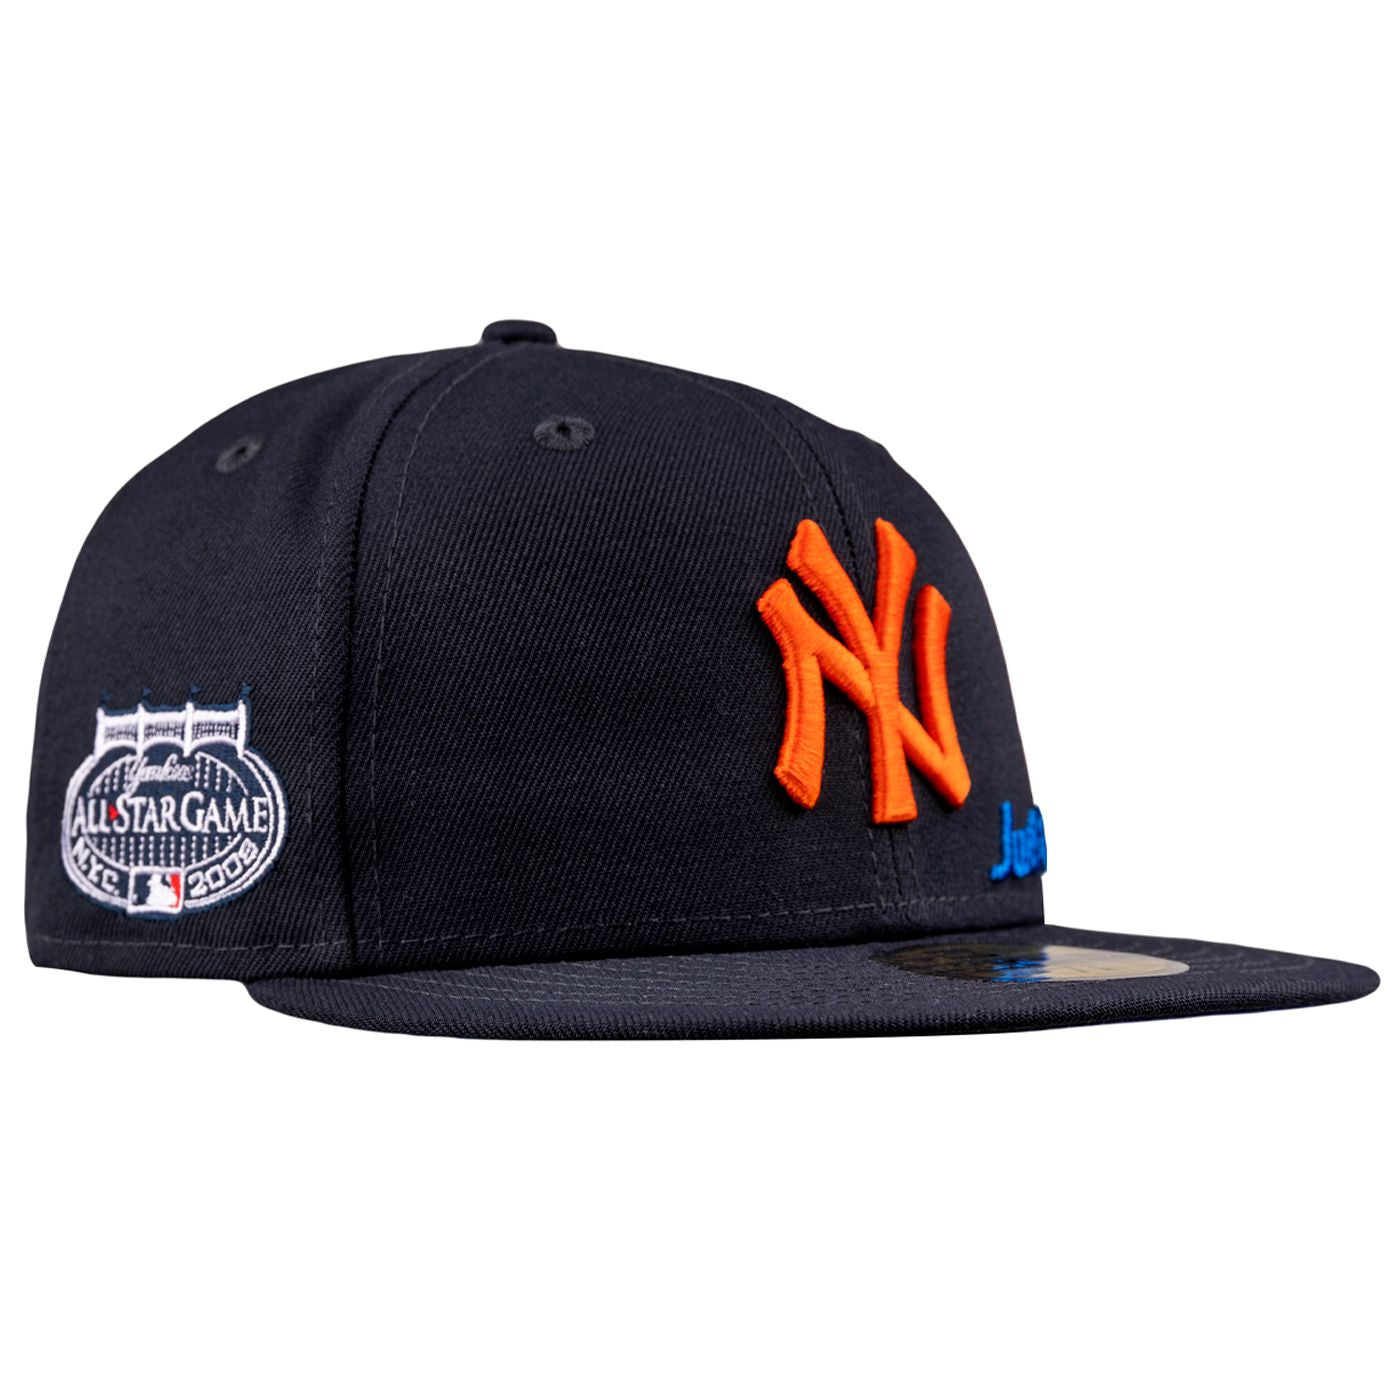 New Era, Rocawear, New York Yankees fitted i Superman snapback kape